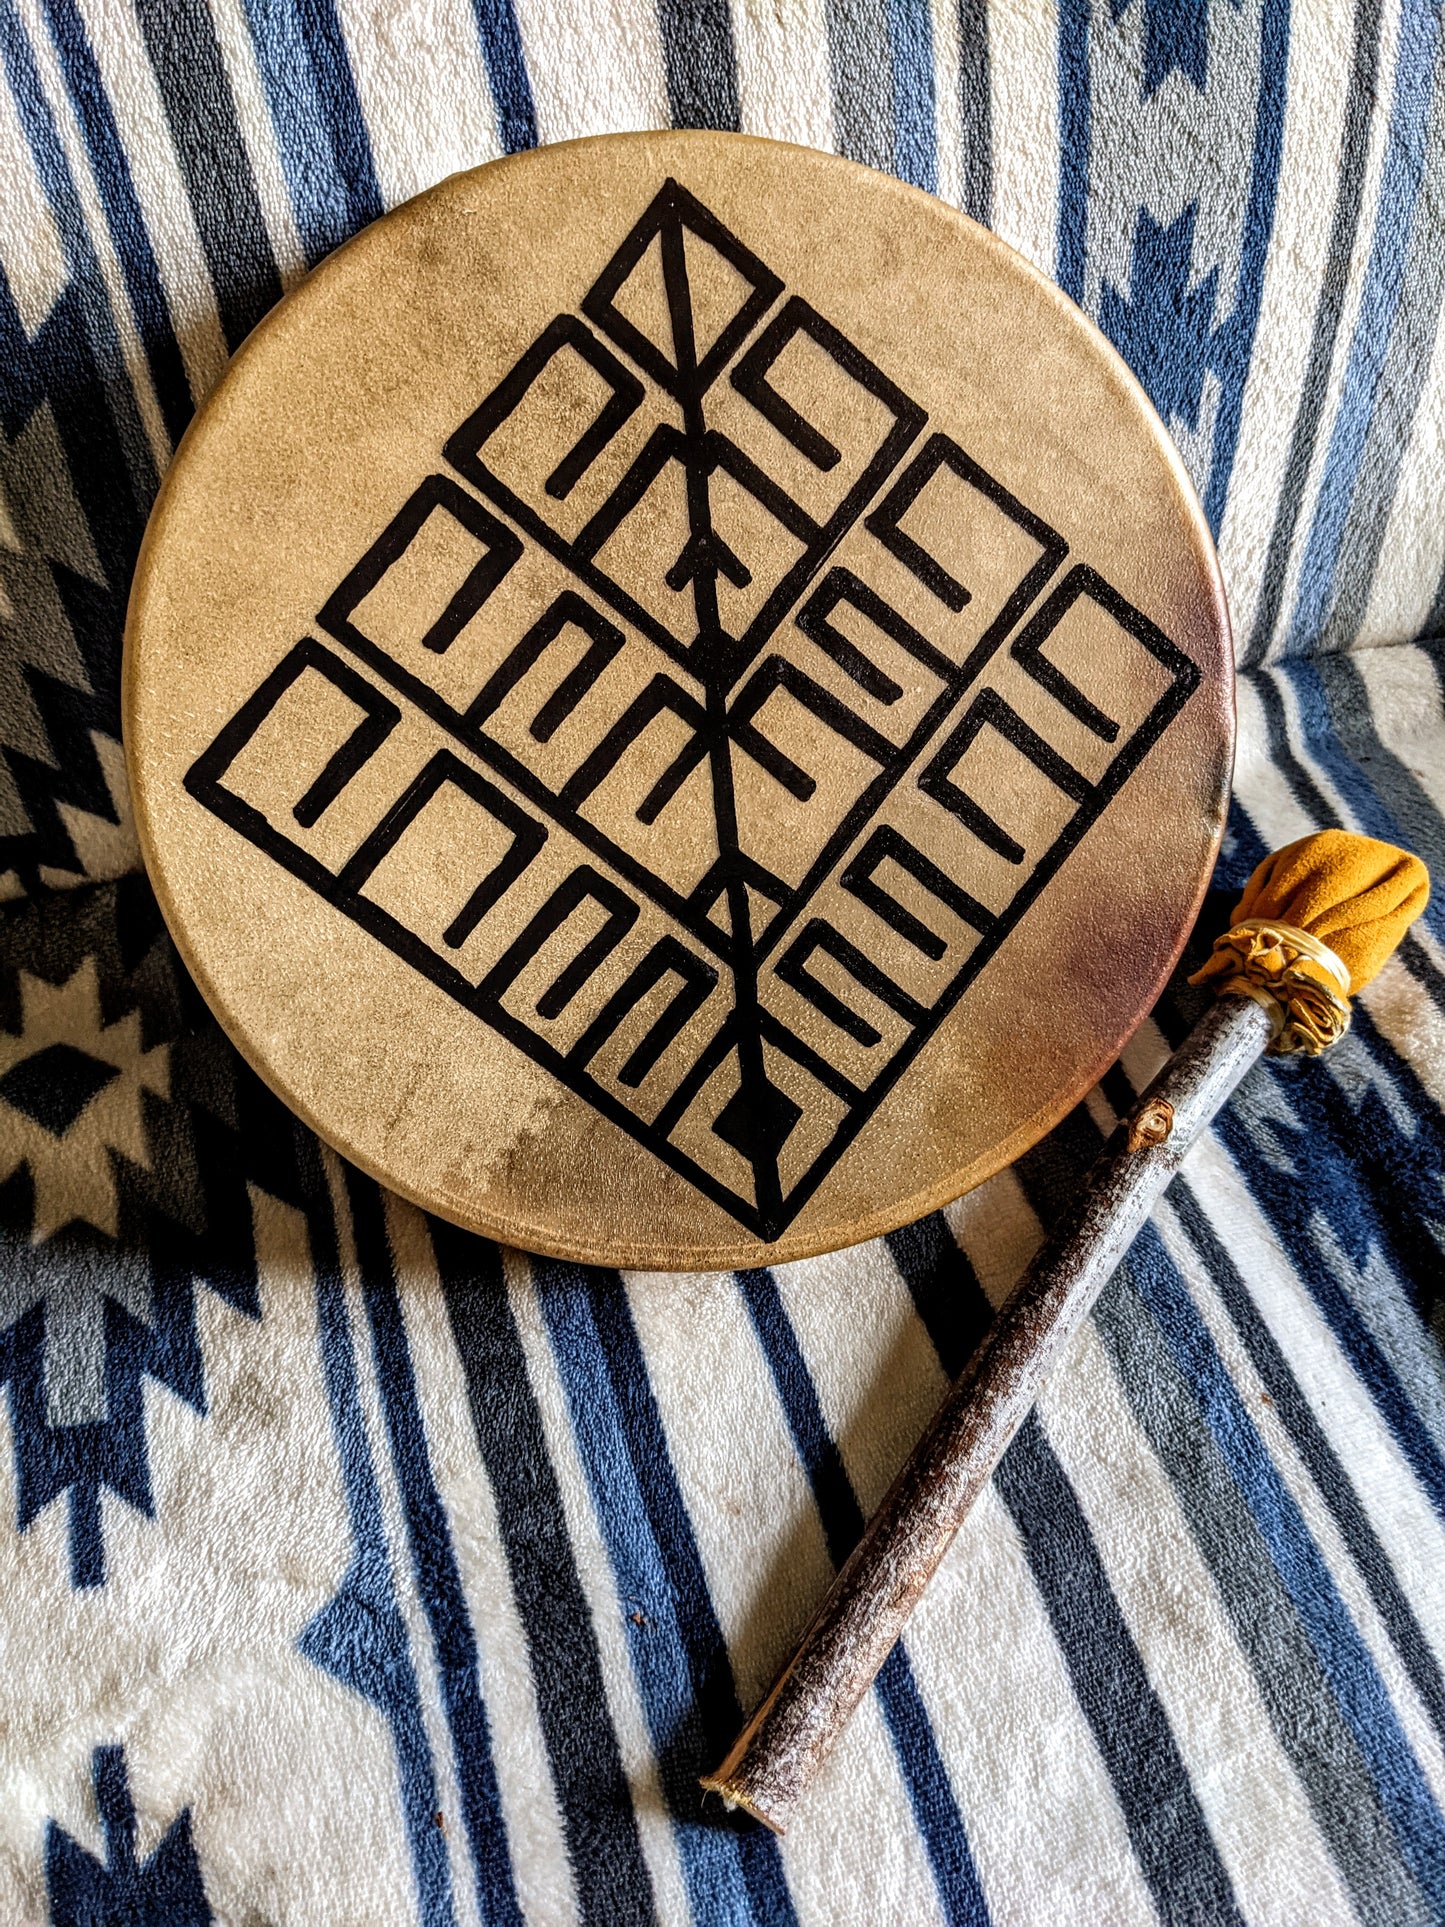 Yggdrasil Art Deer Skin Shaman Drum 10" With Alder Branch Beater Hand Painted Norse Pagan Asatru Norse Mythology